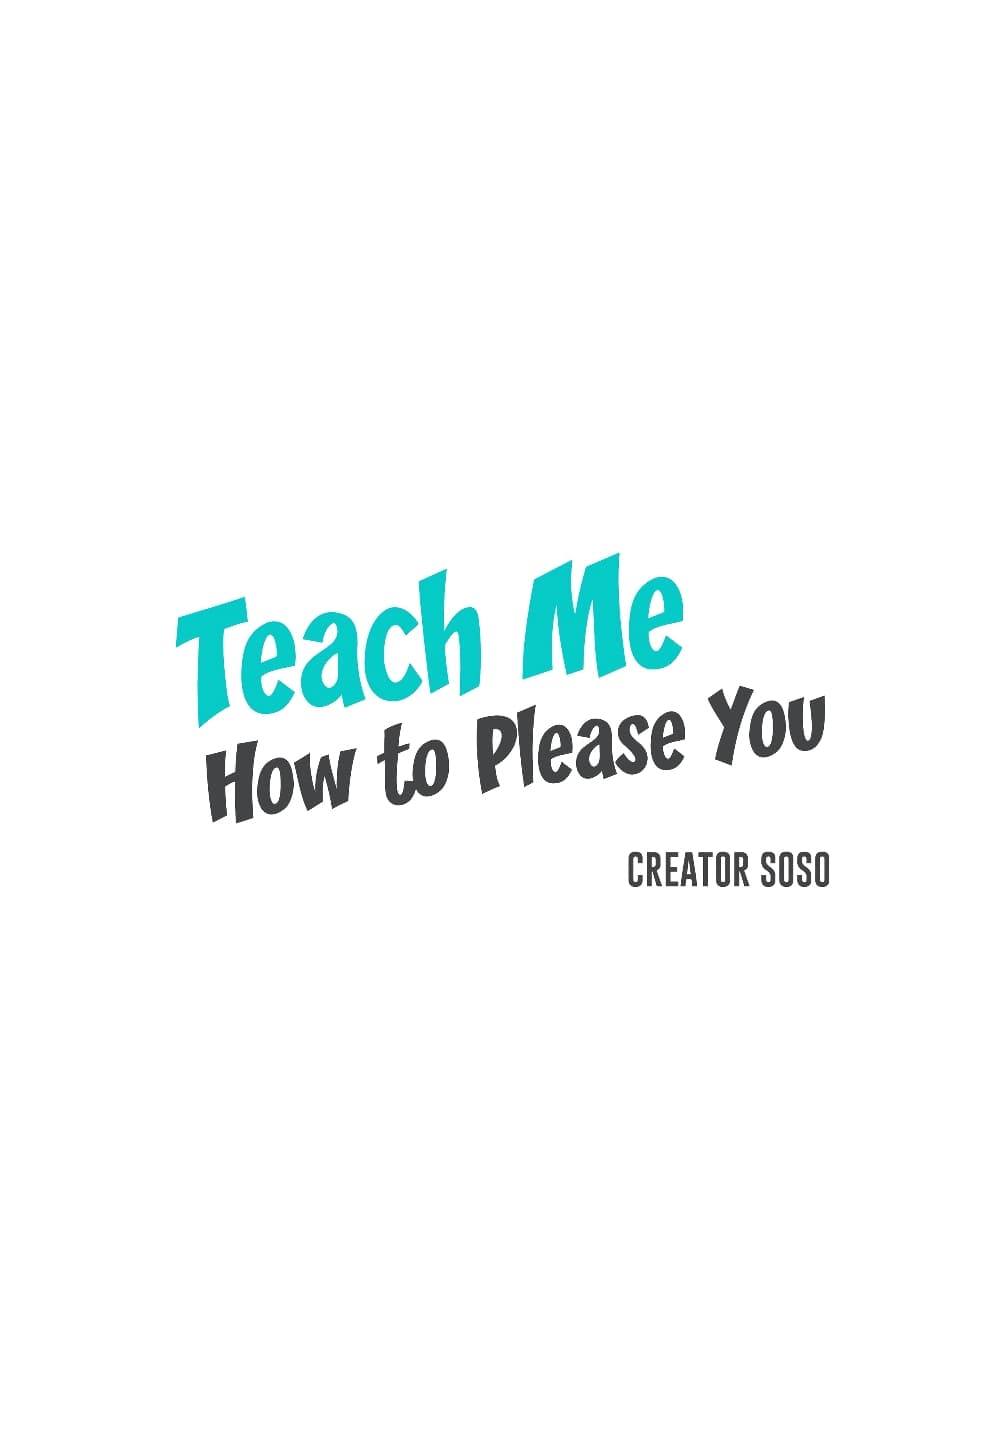 Teach Me How to Please You 20 (1)